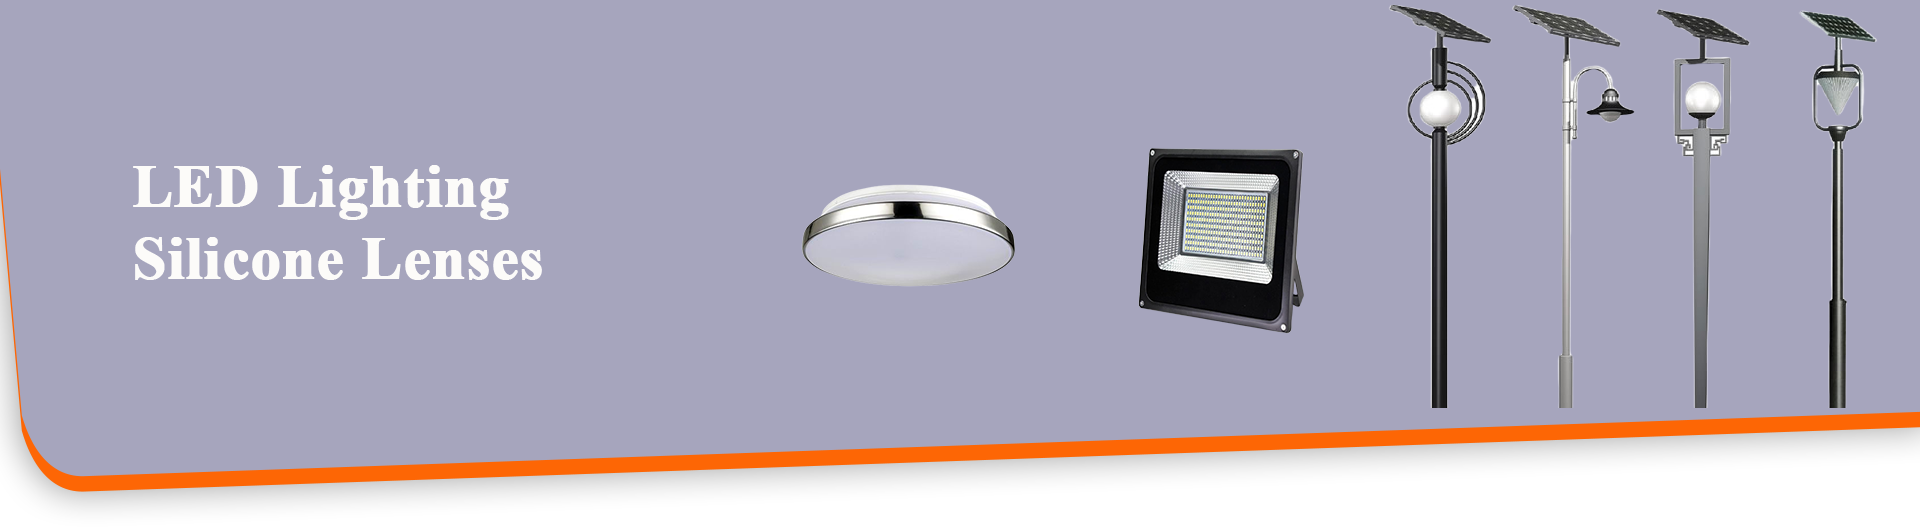 Silicone LED Lens